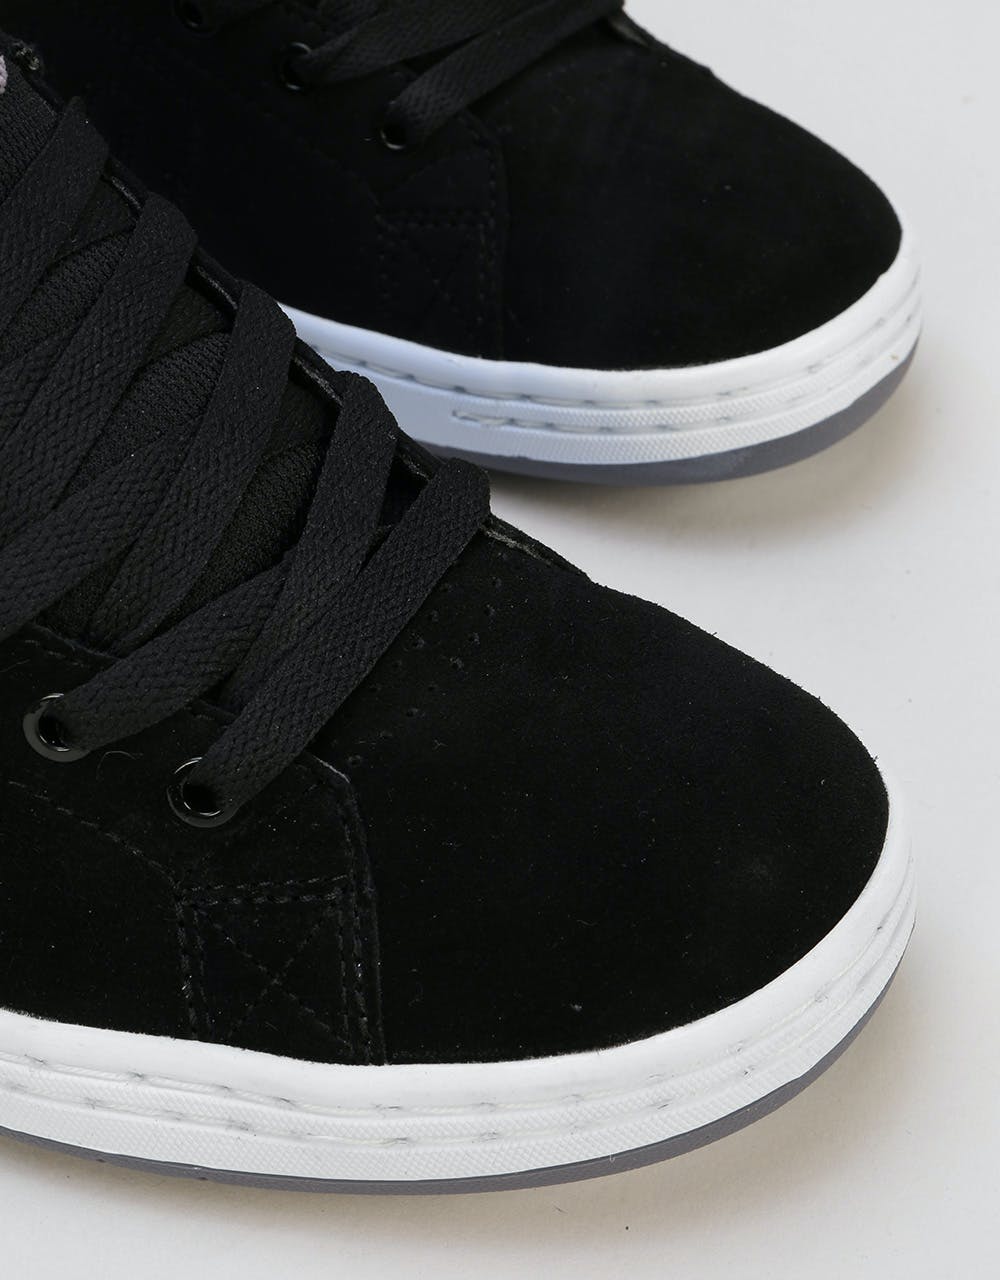 Etnies Calli-Cut Skate Shoes - Black/Grey